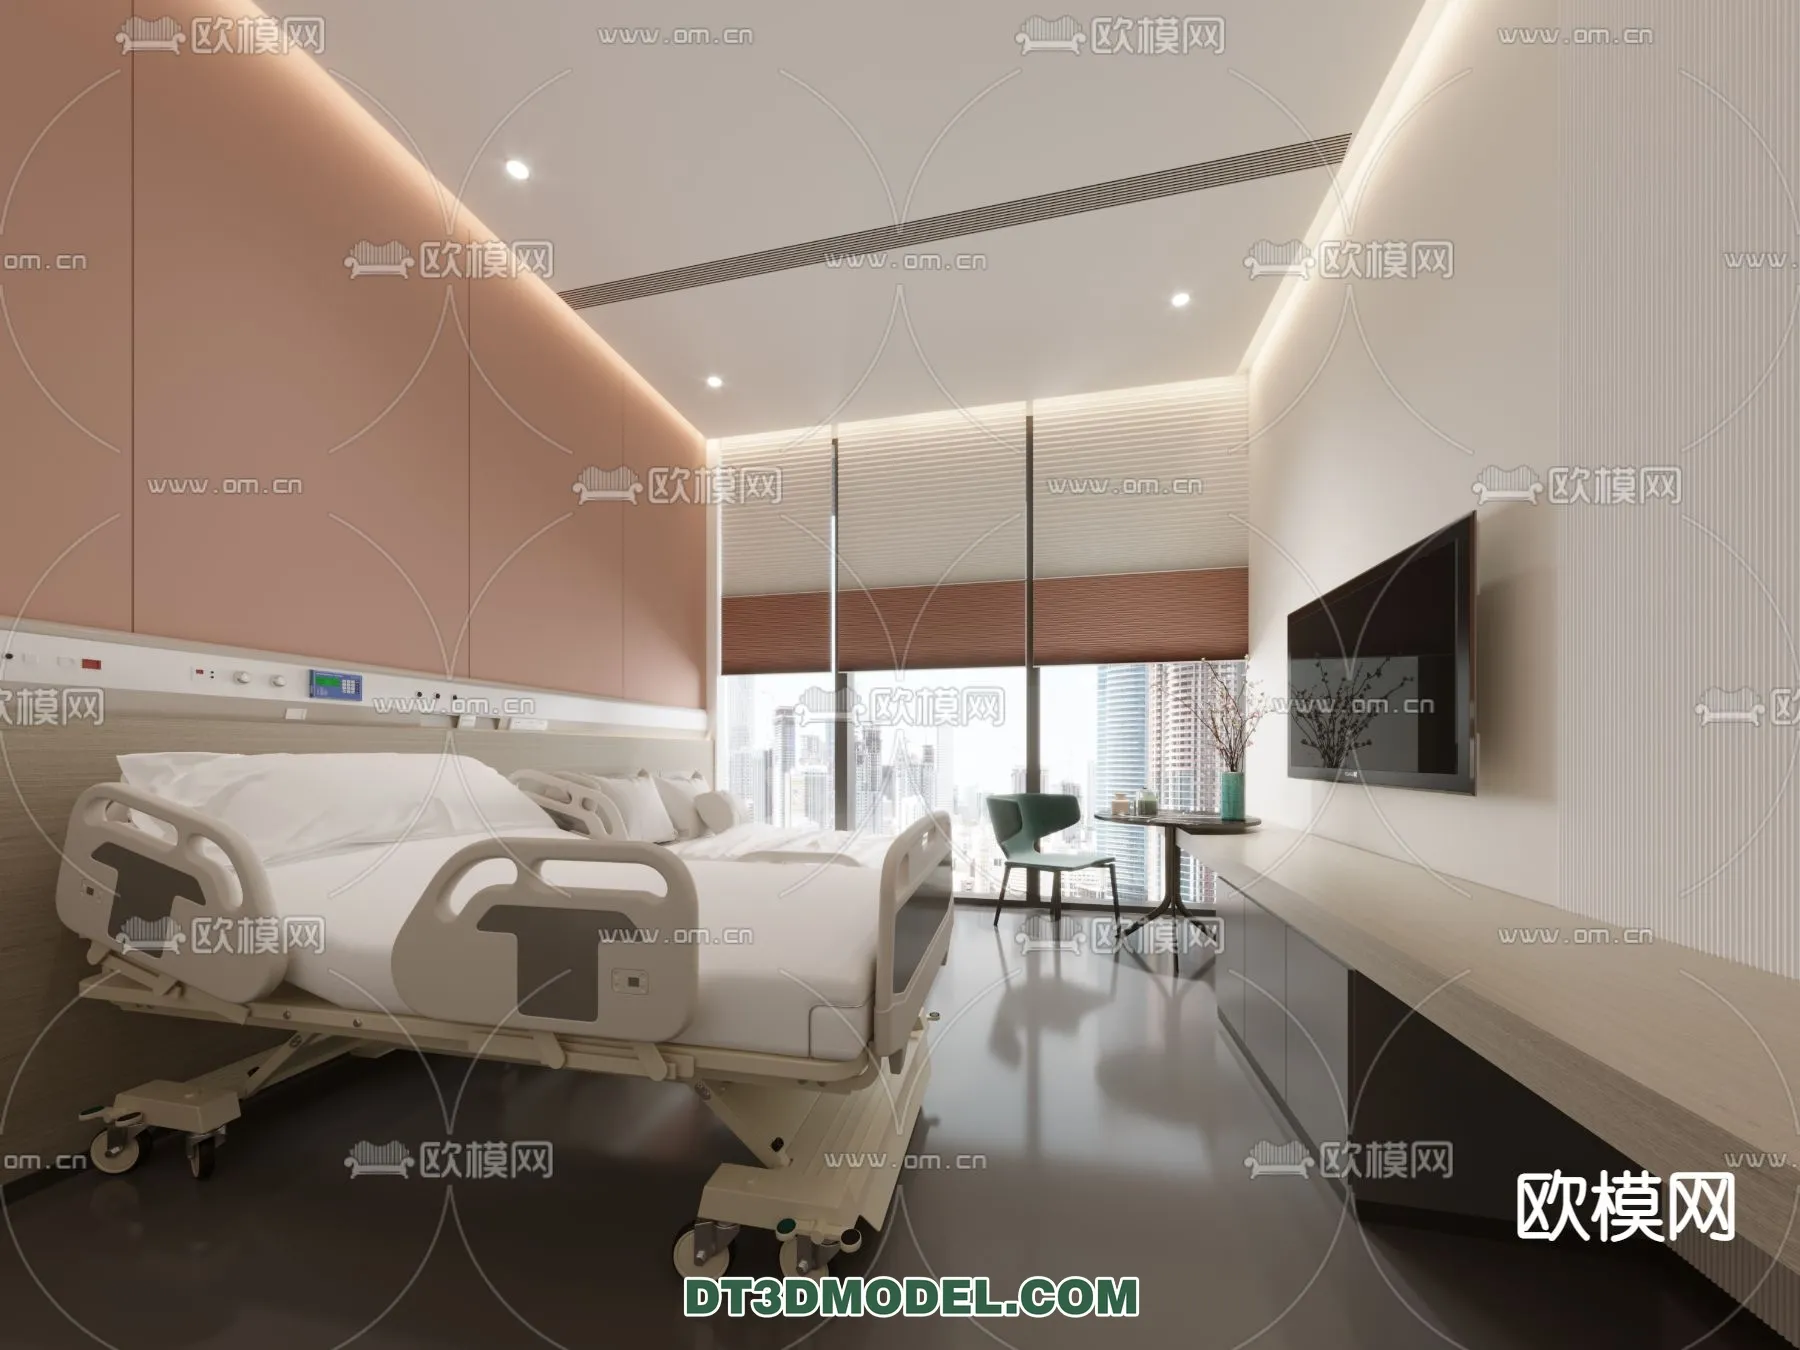 HOSPITAL 3D SCENES – MODERN – 0085